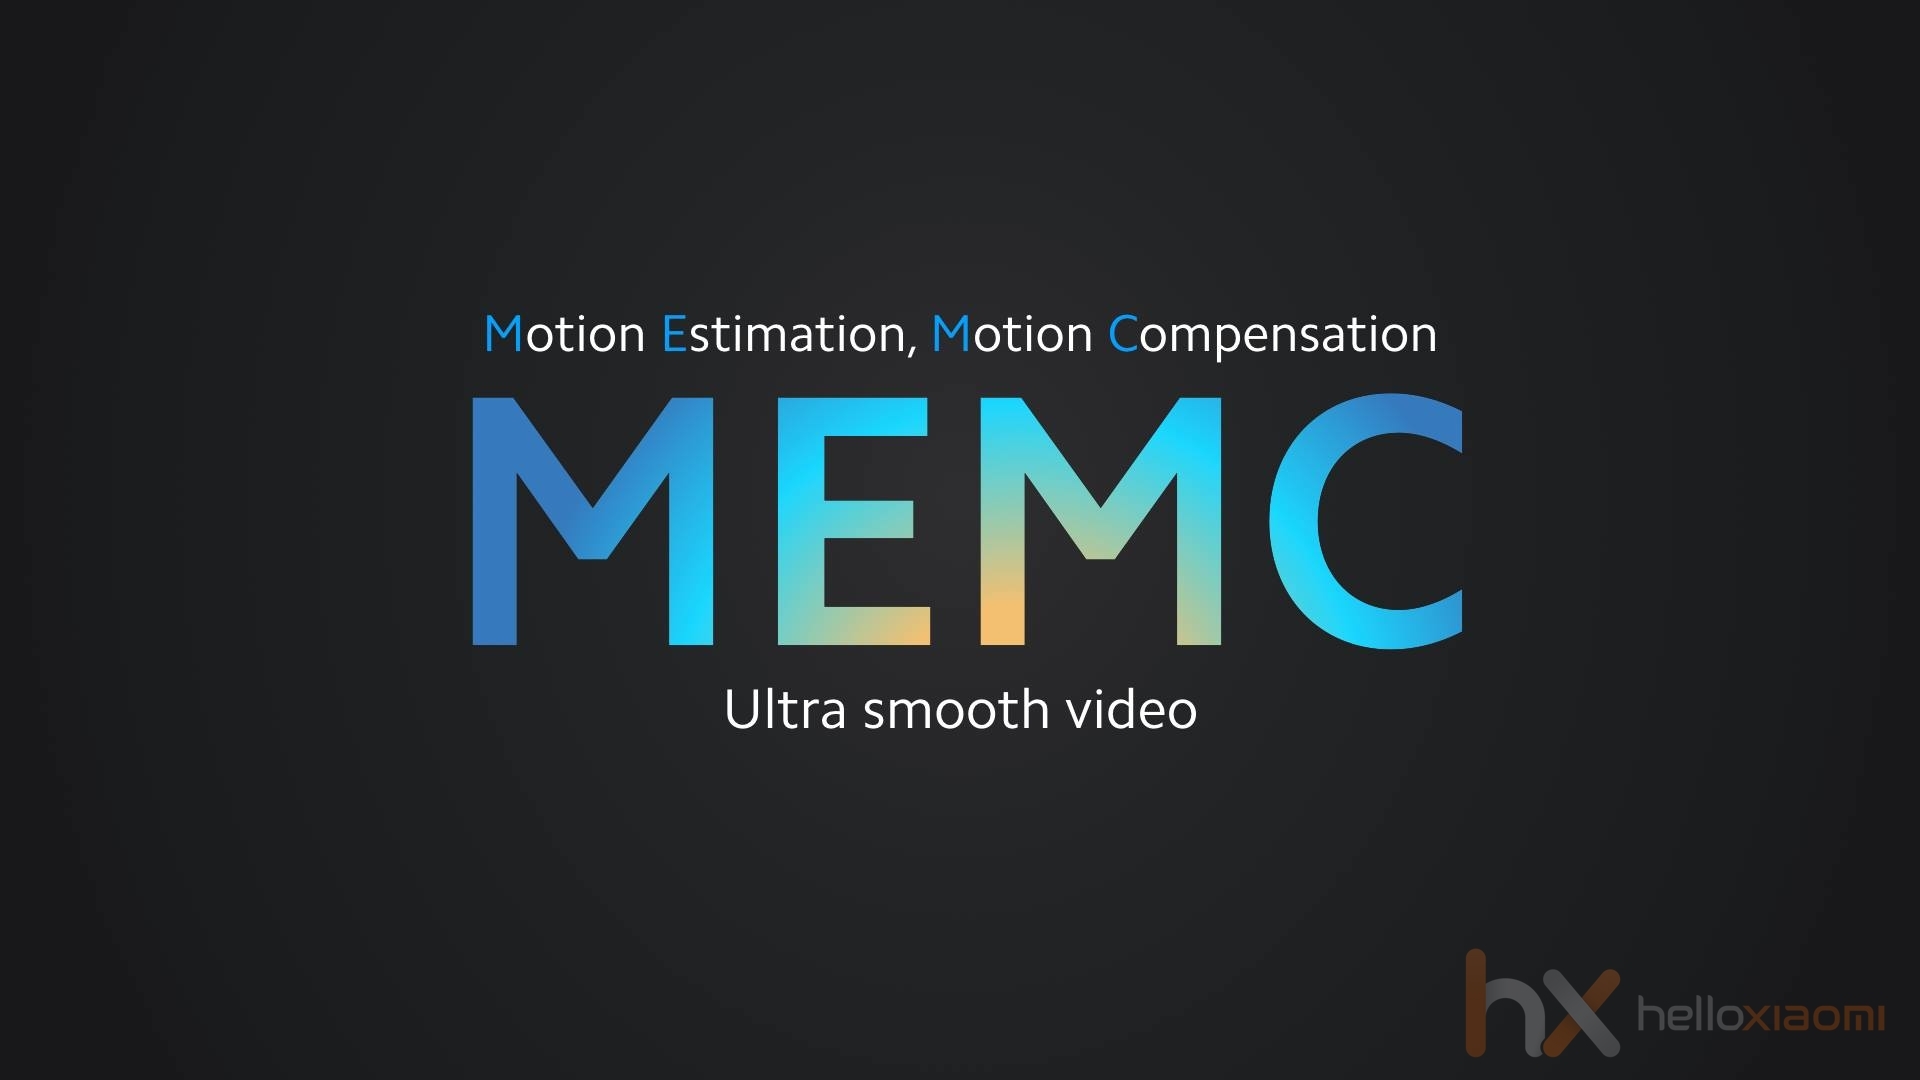 Memc в телевизоре. MEMC В телевизоре что это. MEMC logo. Motion estimation/Motion compensation. Технология MEMC В ТВ.